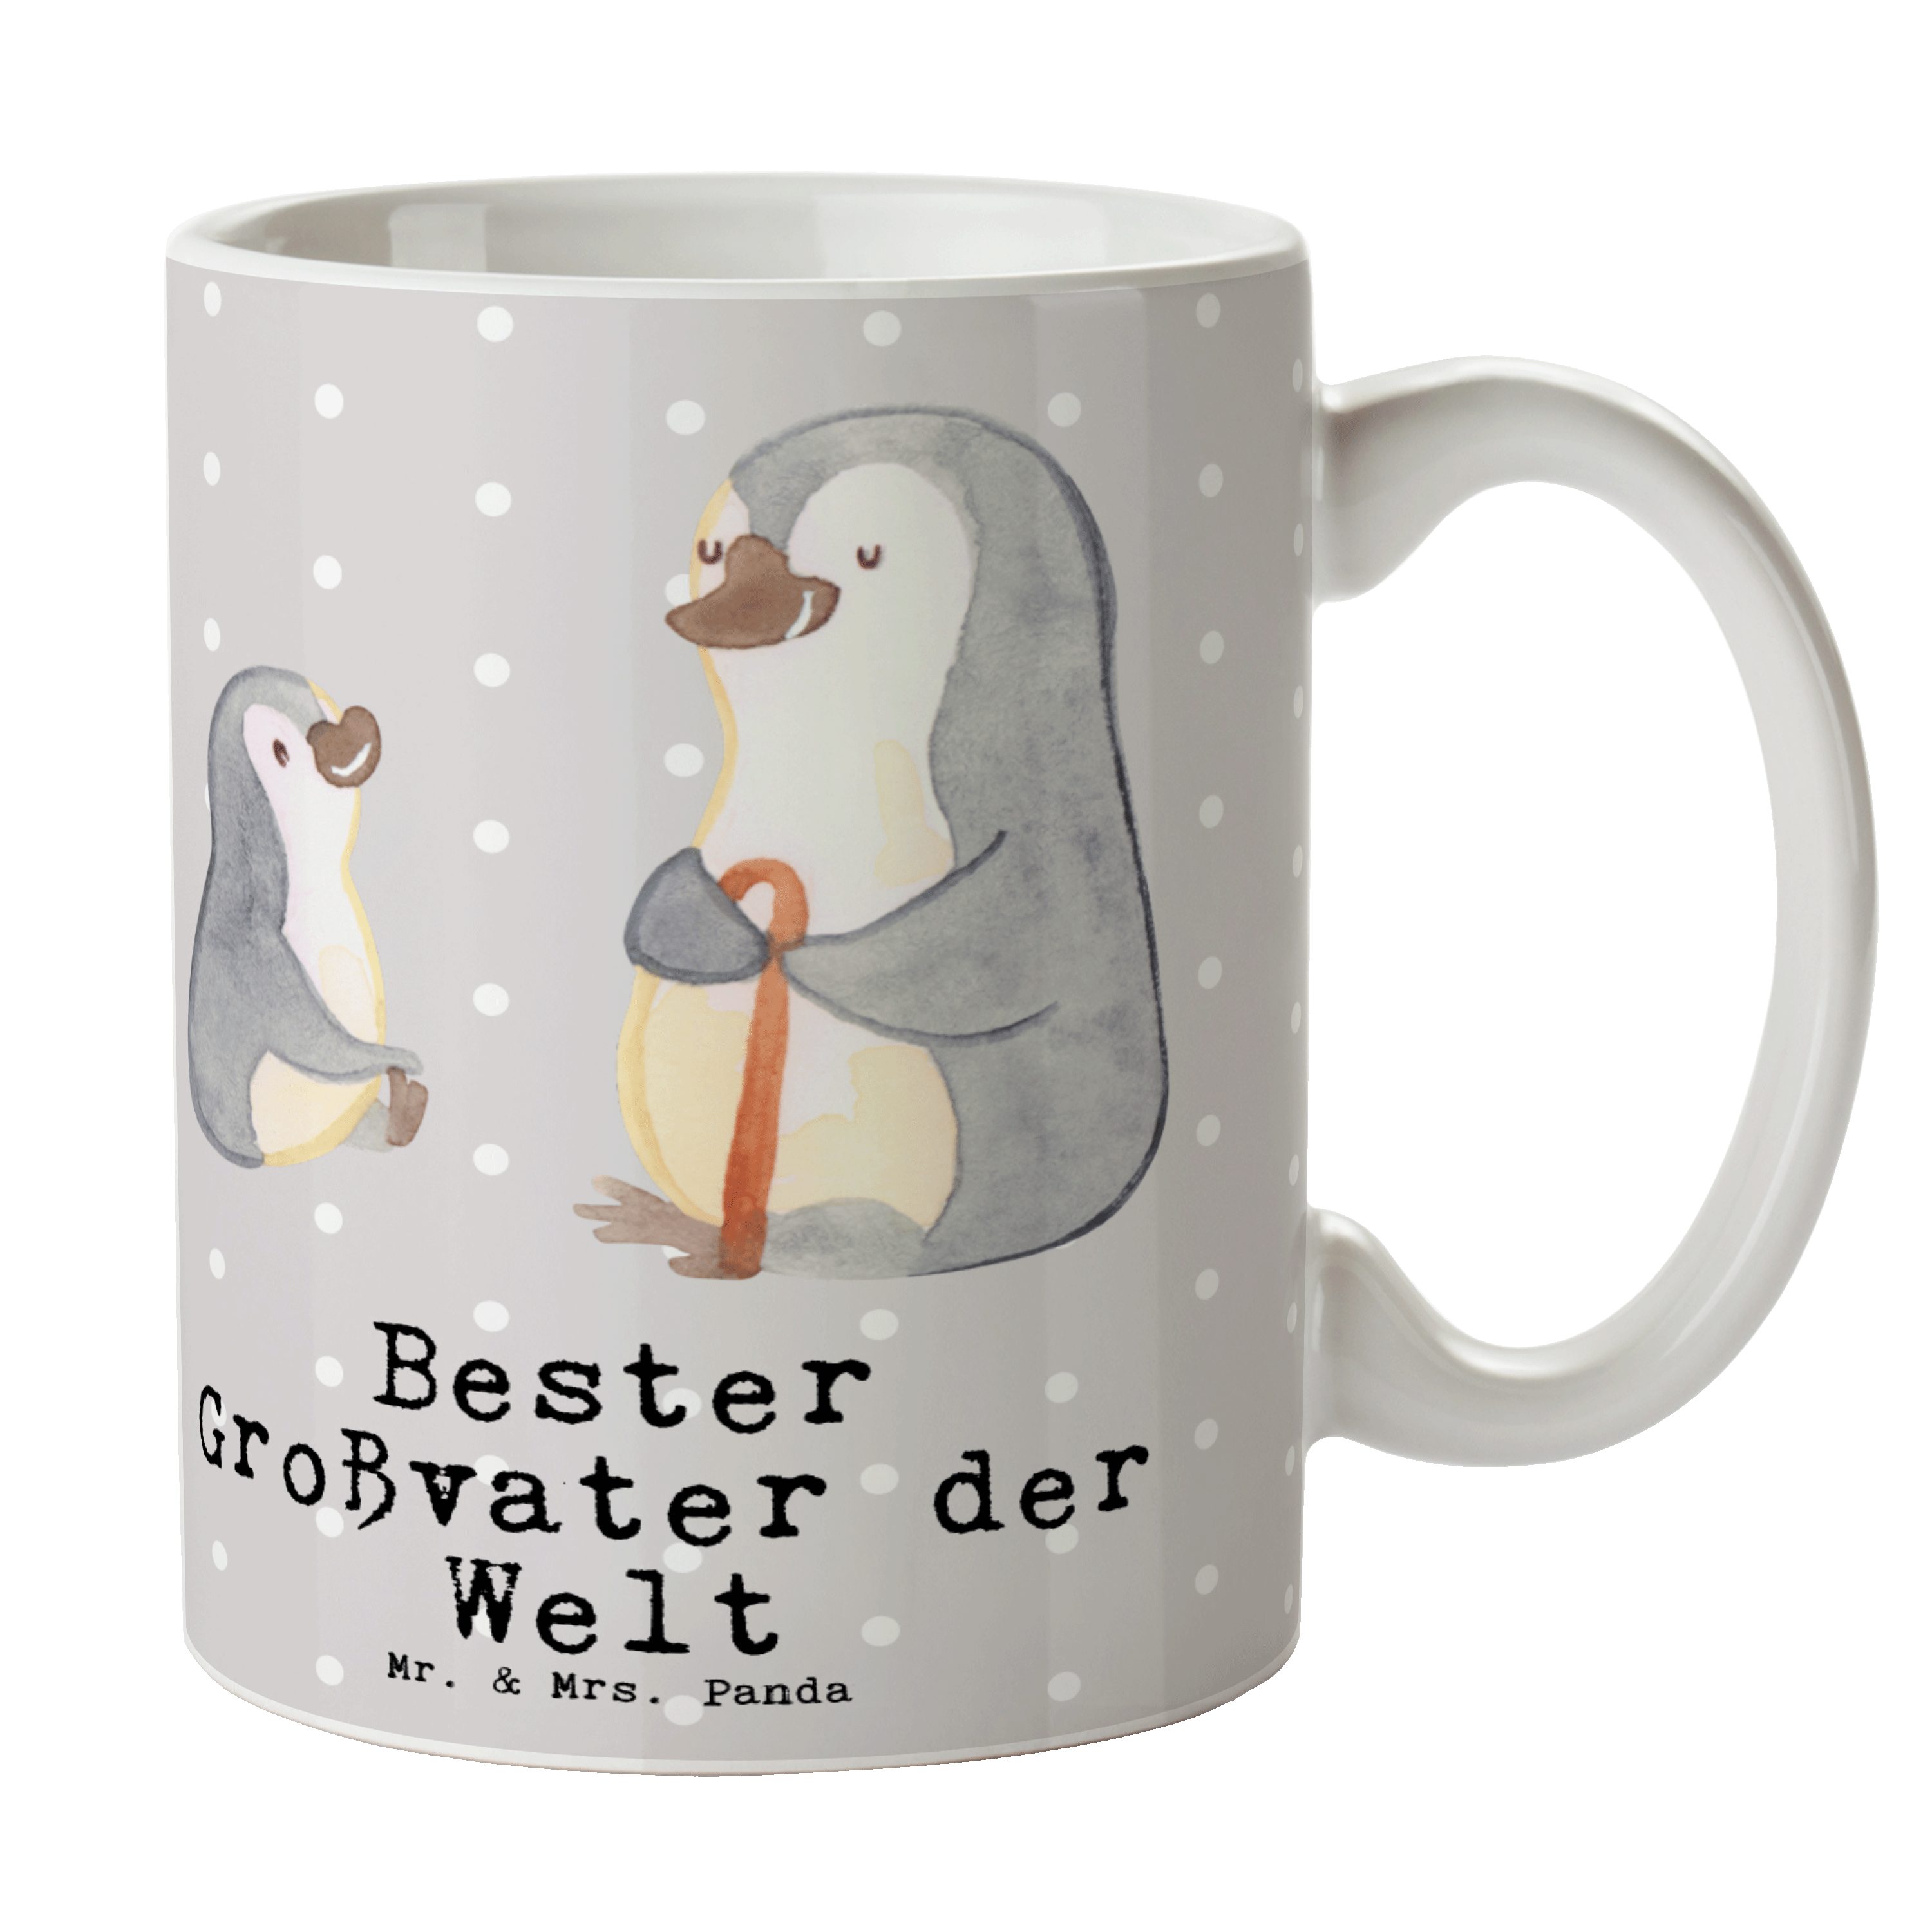 Mr. & Mrs. Panda Tasse Pinguin Bester Großvater der Welt - Grau Pastell - Geschenk, Oppa, Bü, Keramik